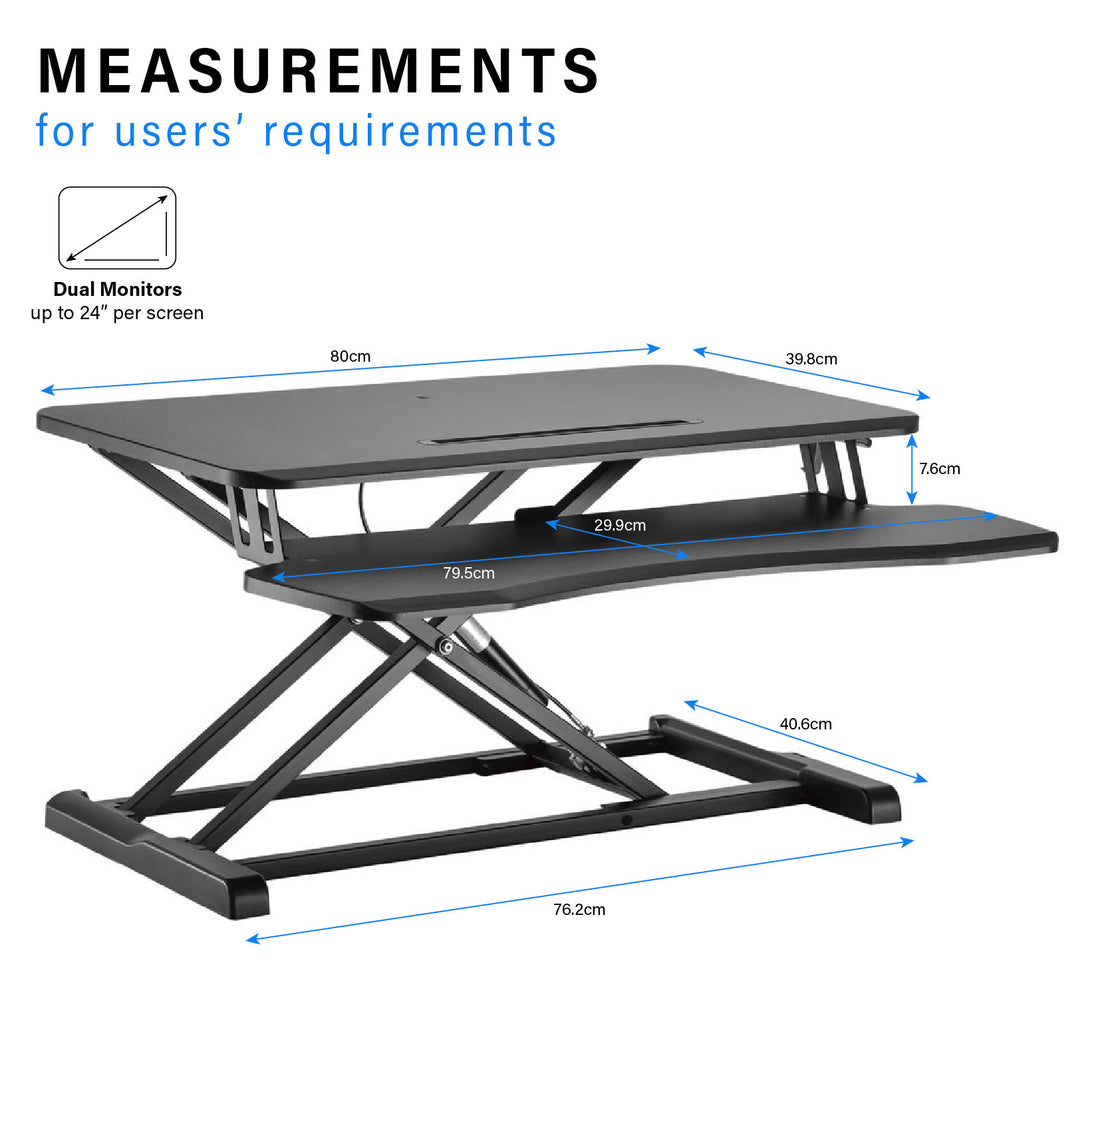 ULTi Desk Converter Riser, Standing Desk, Height Adjustable, Sit-Stand w Monitor & Laptop, Keyboard Tray & Tablet Holder